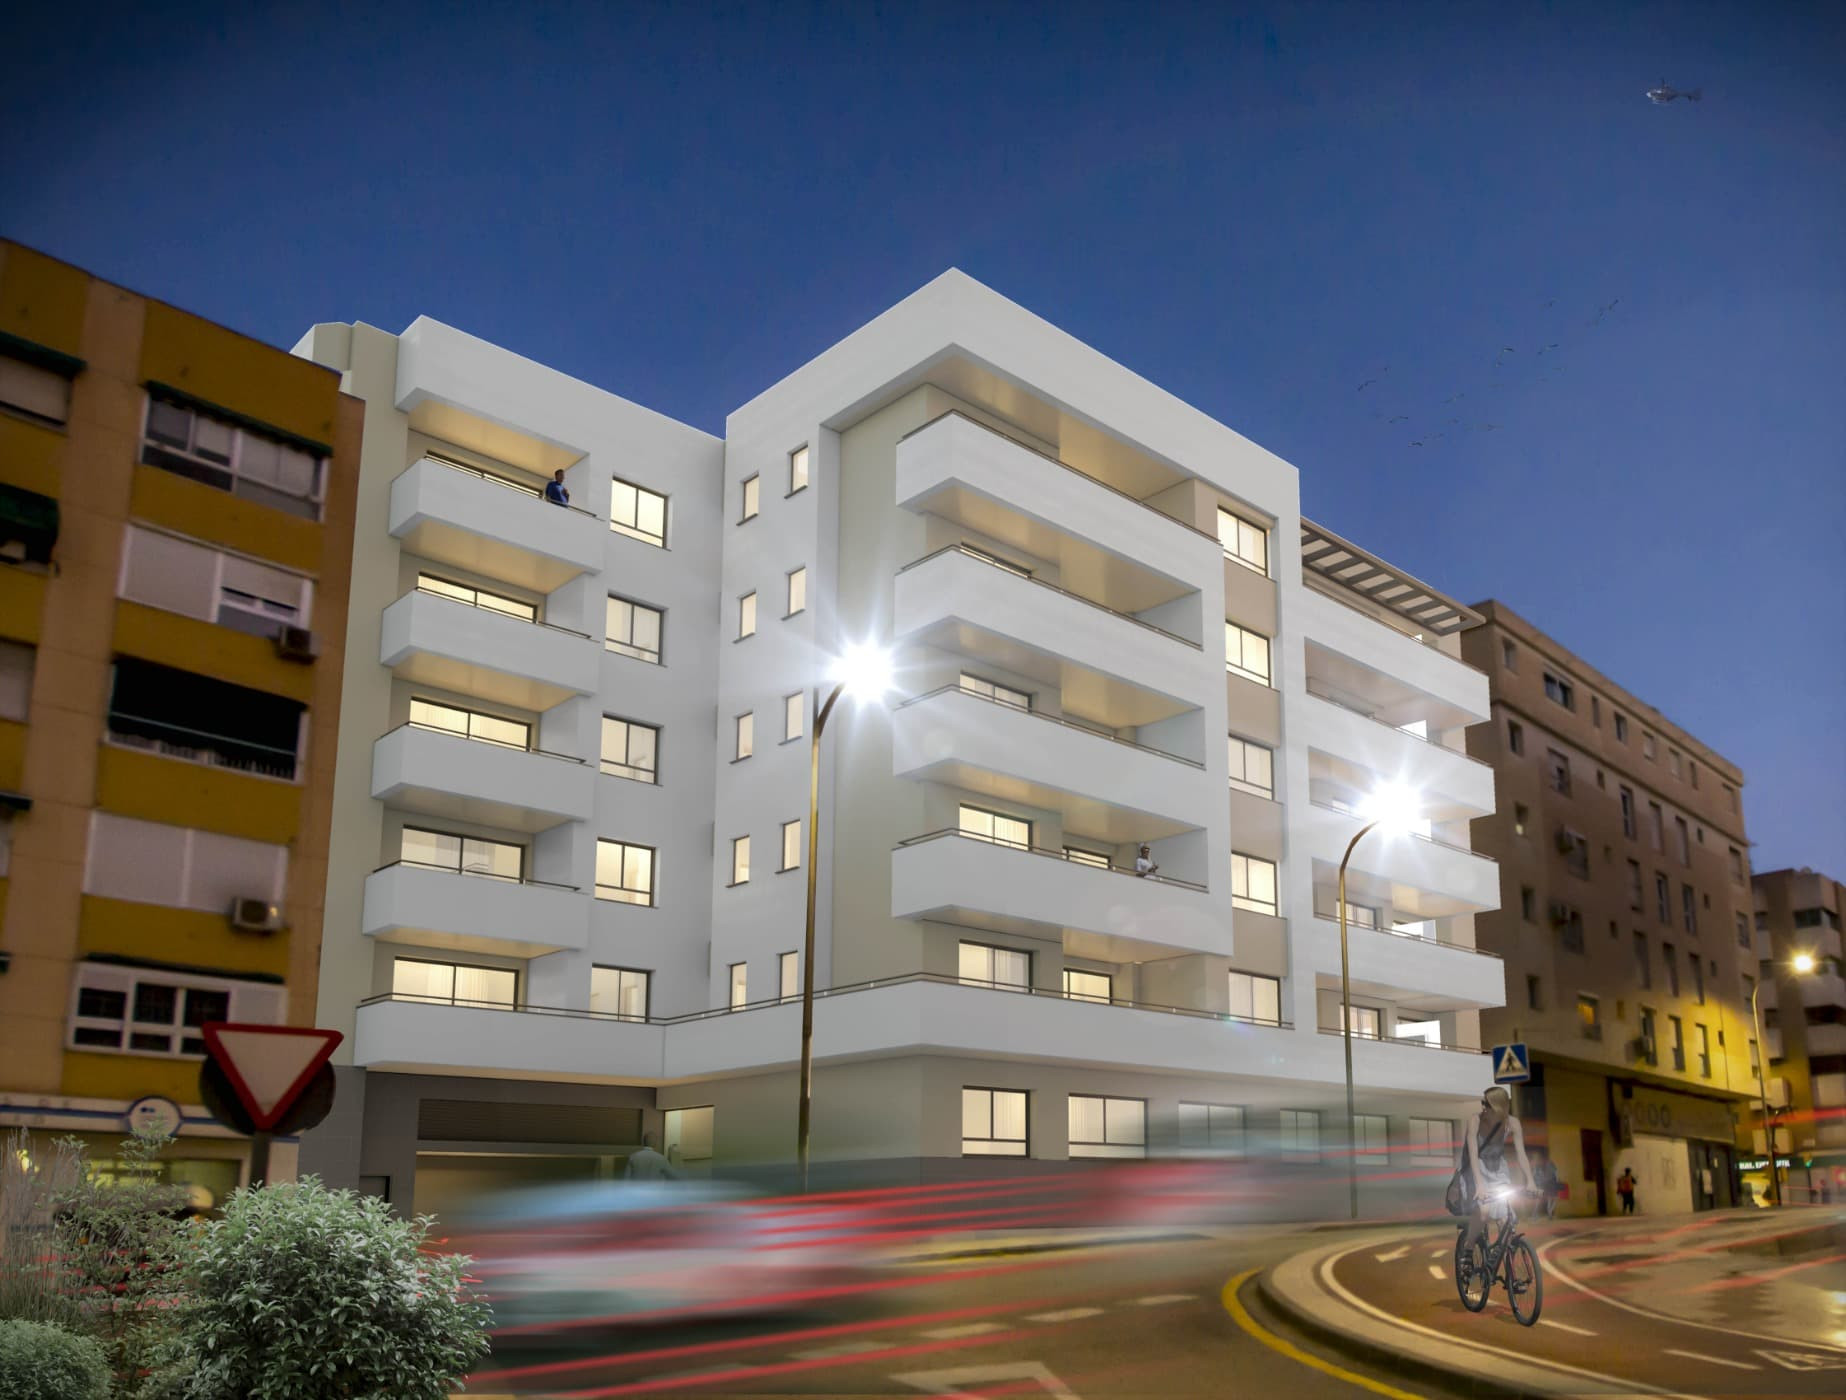 Edificio Cabas Galván: New promotion comprising 23 homes located in the city of Malaga.